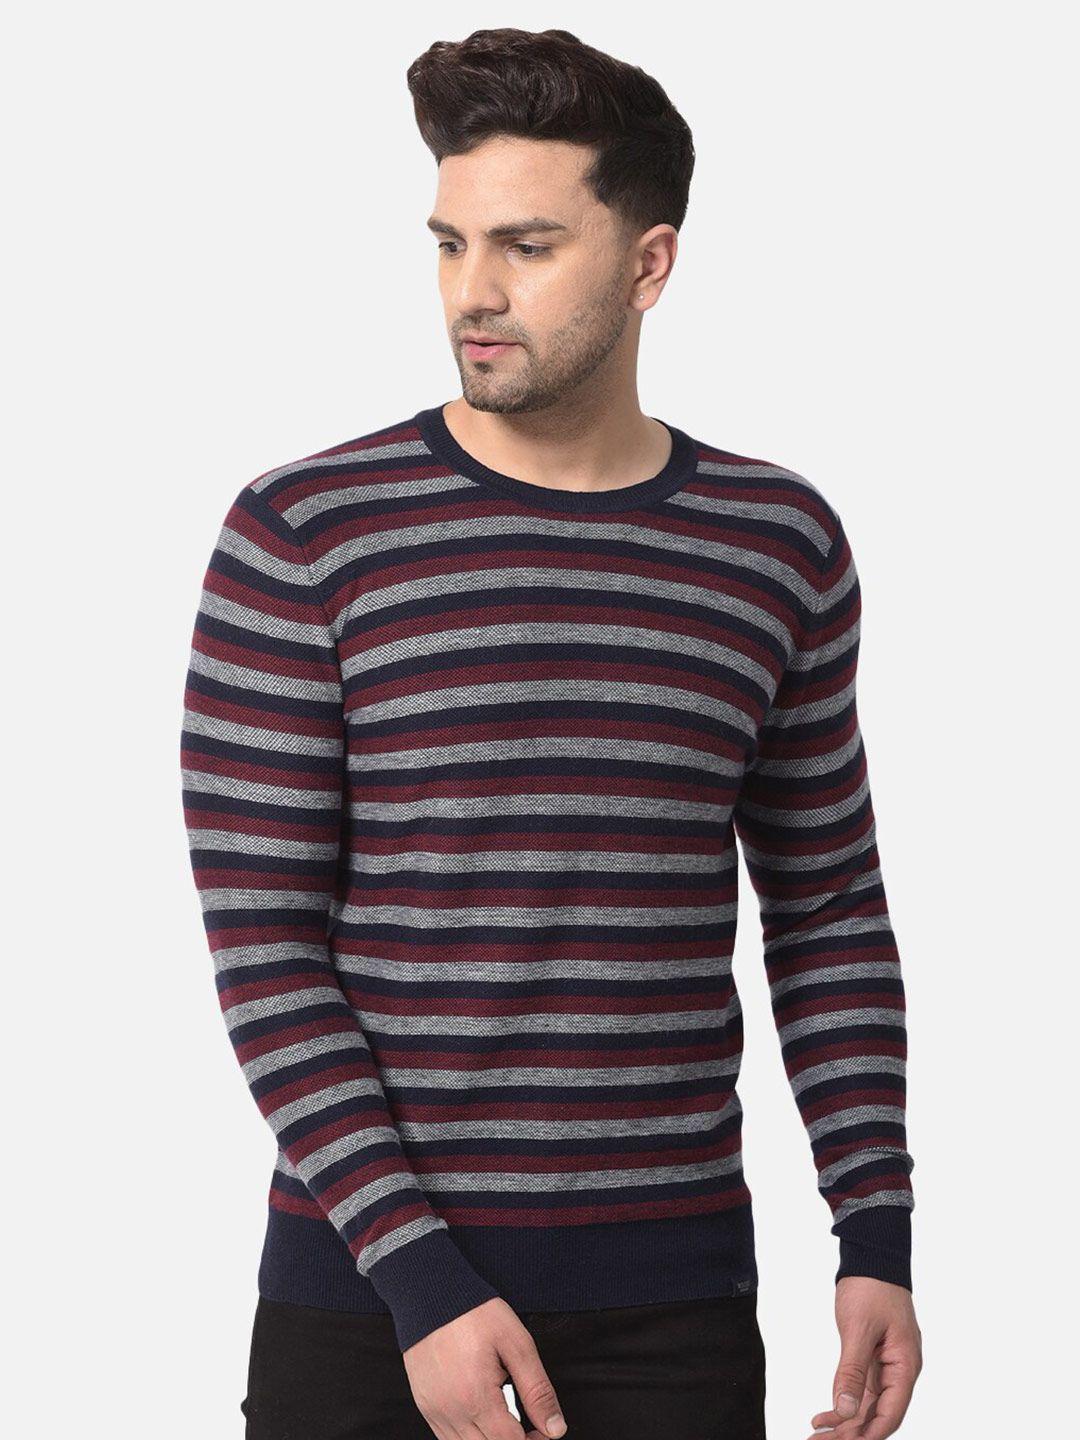 woods-men-navy-blue-striped-sweater